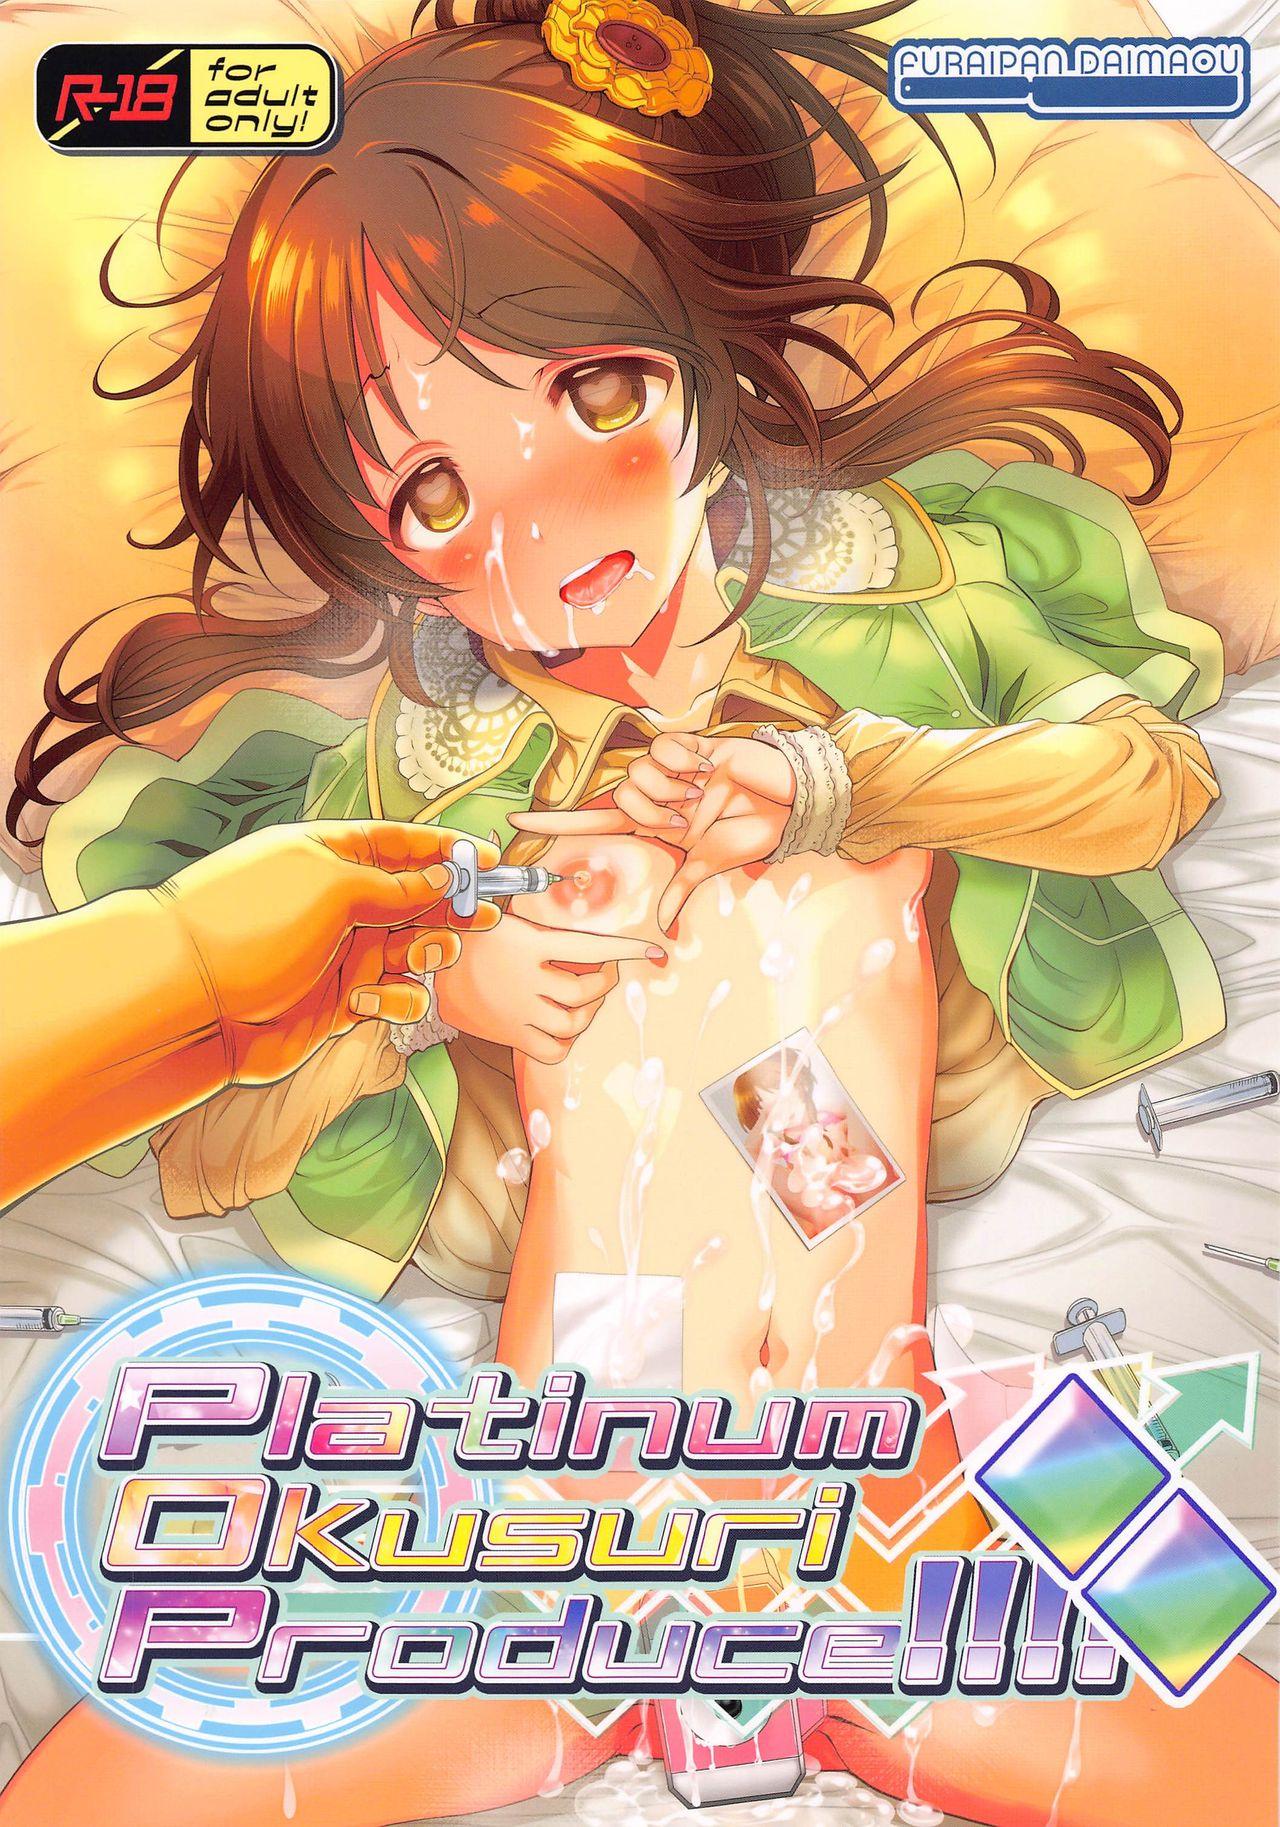 Pene Platinum Okusuri Produce!!!! ◇◇ - The idolmaster Pure18 - Page 1